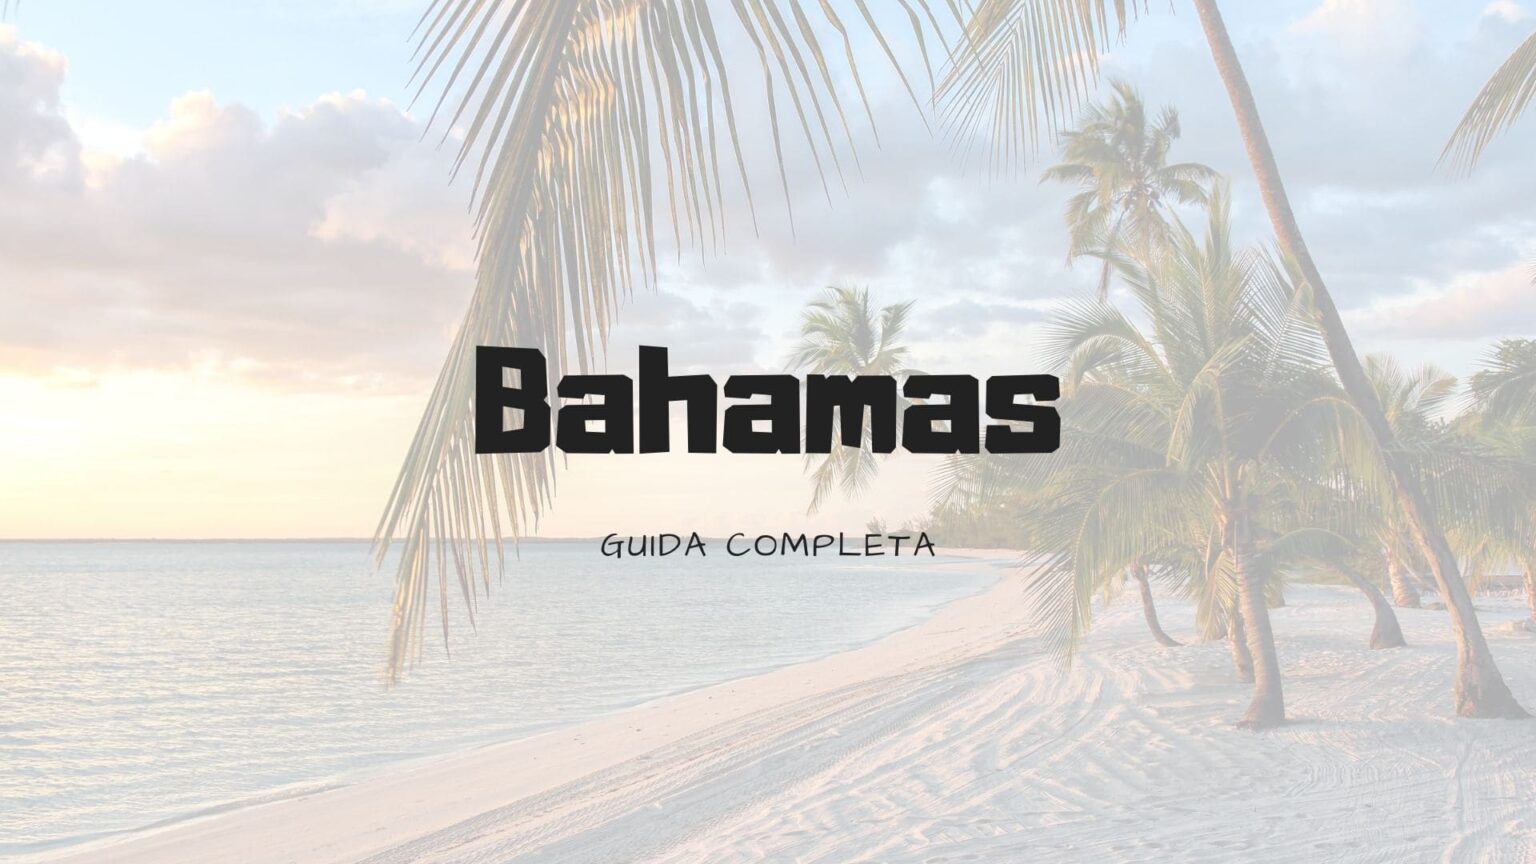 Visitare le Bahamas